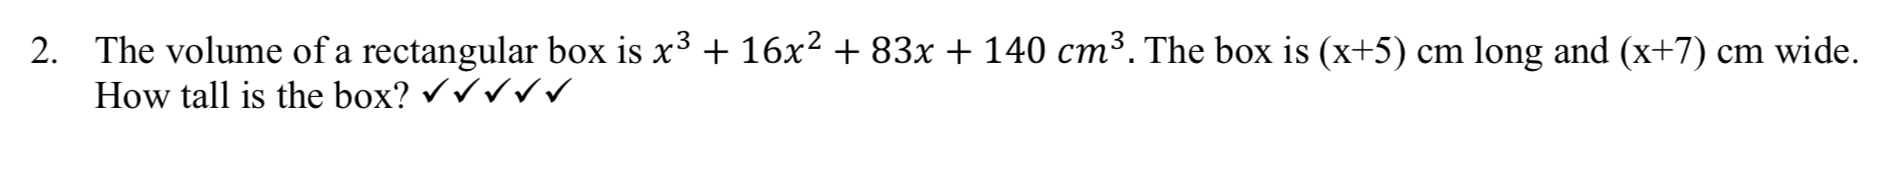 The volume of a rectangular box is x3 + 16x2 + 83x + 140 cm³. The box is (x+5) cm long and (x+7) cm wide.
How tall is the box? rv
